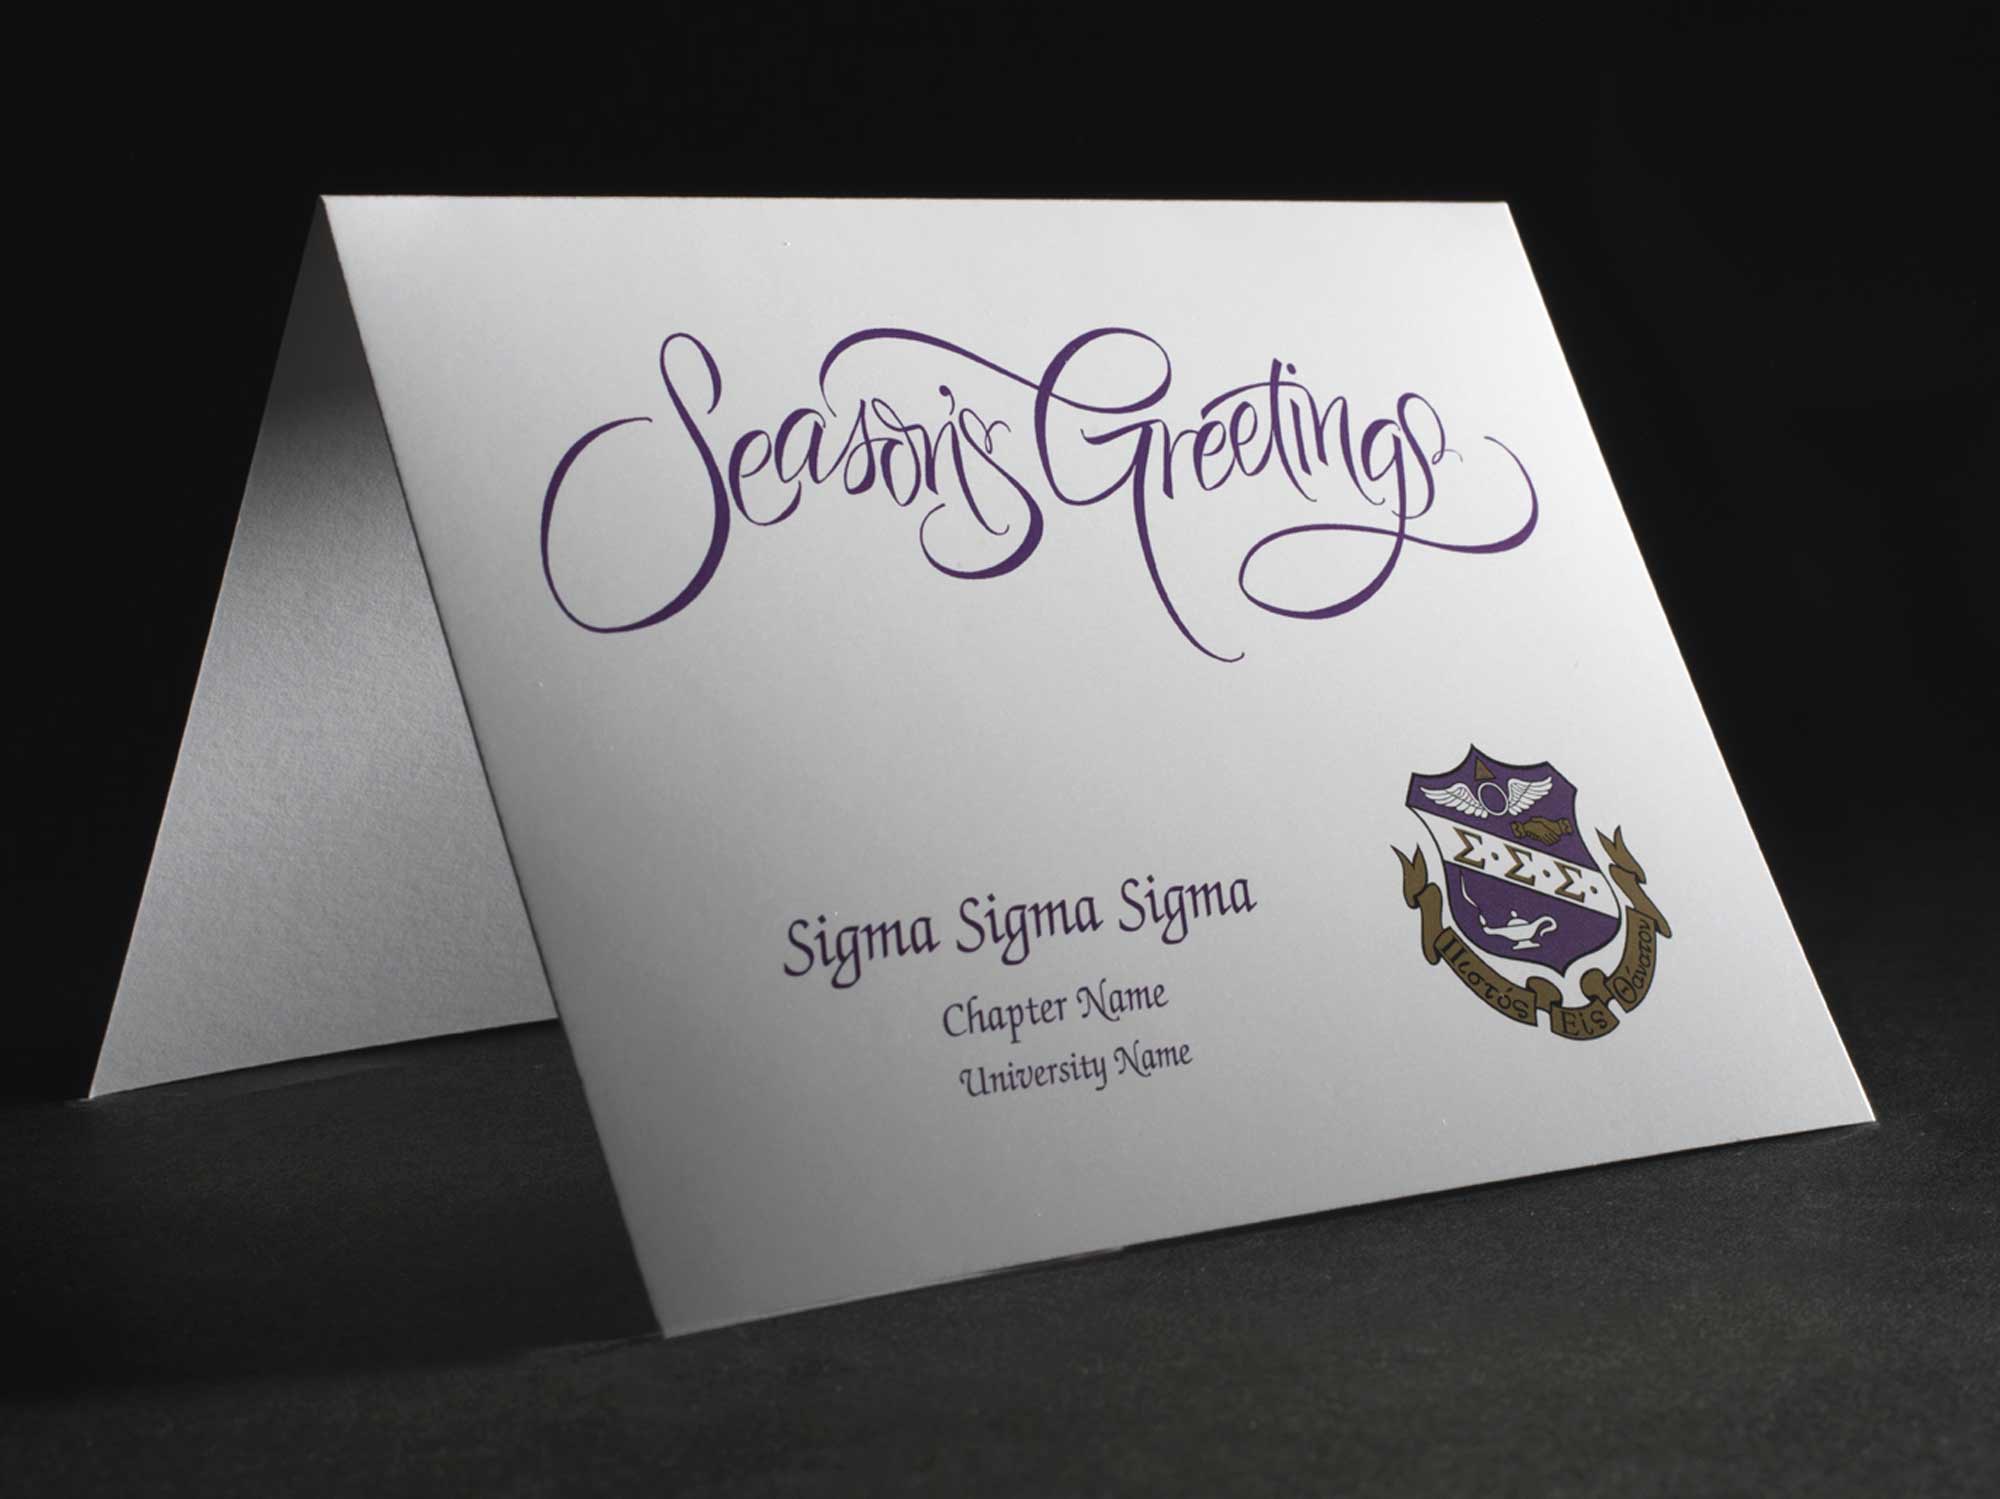 Seasons Greetings Cards Sigma Sigma Sigma